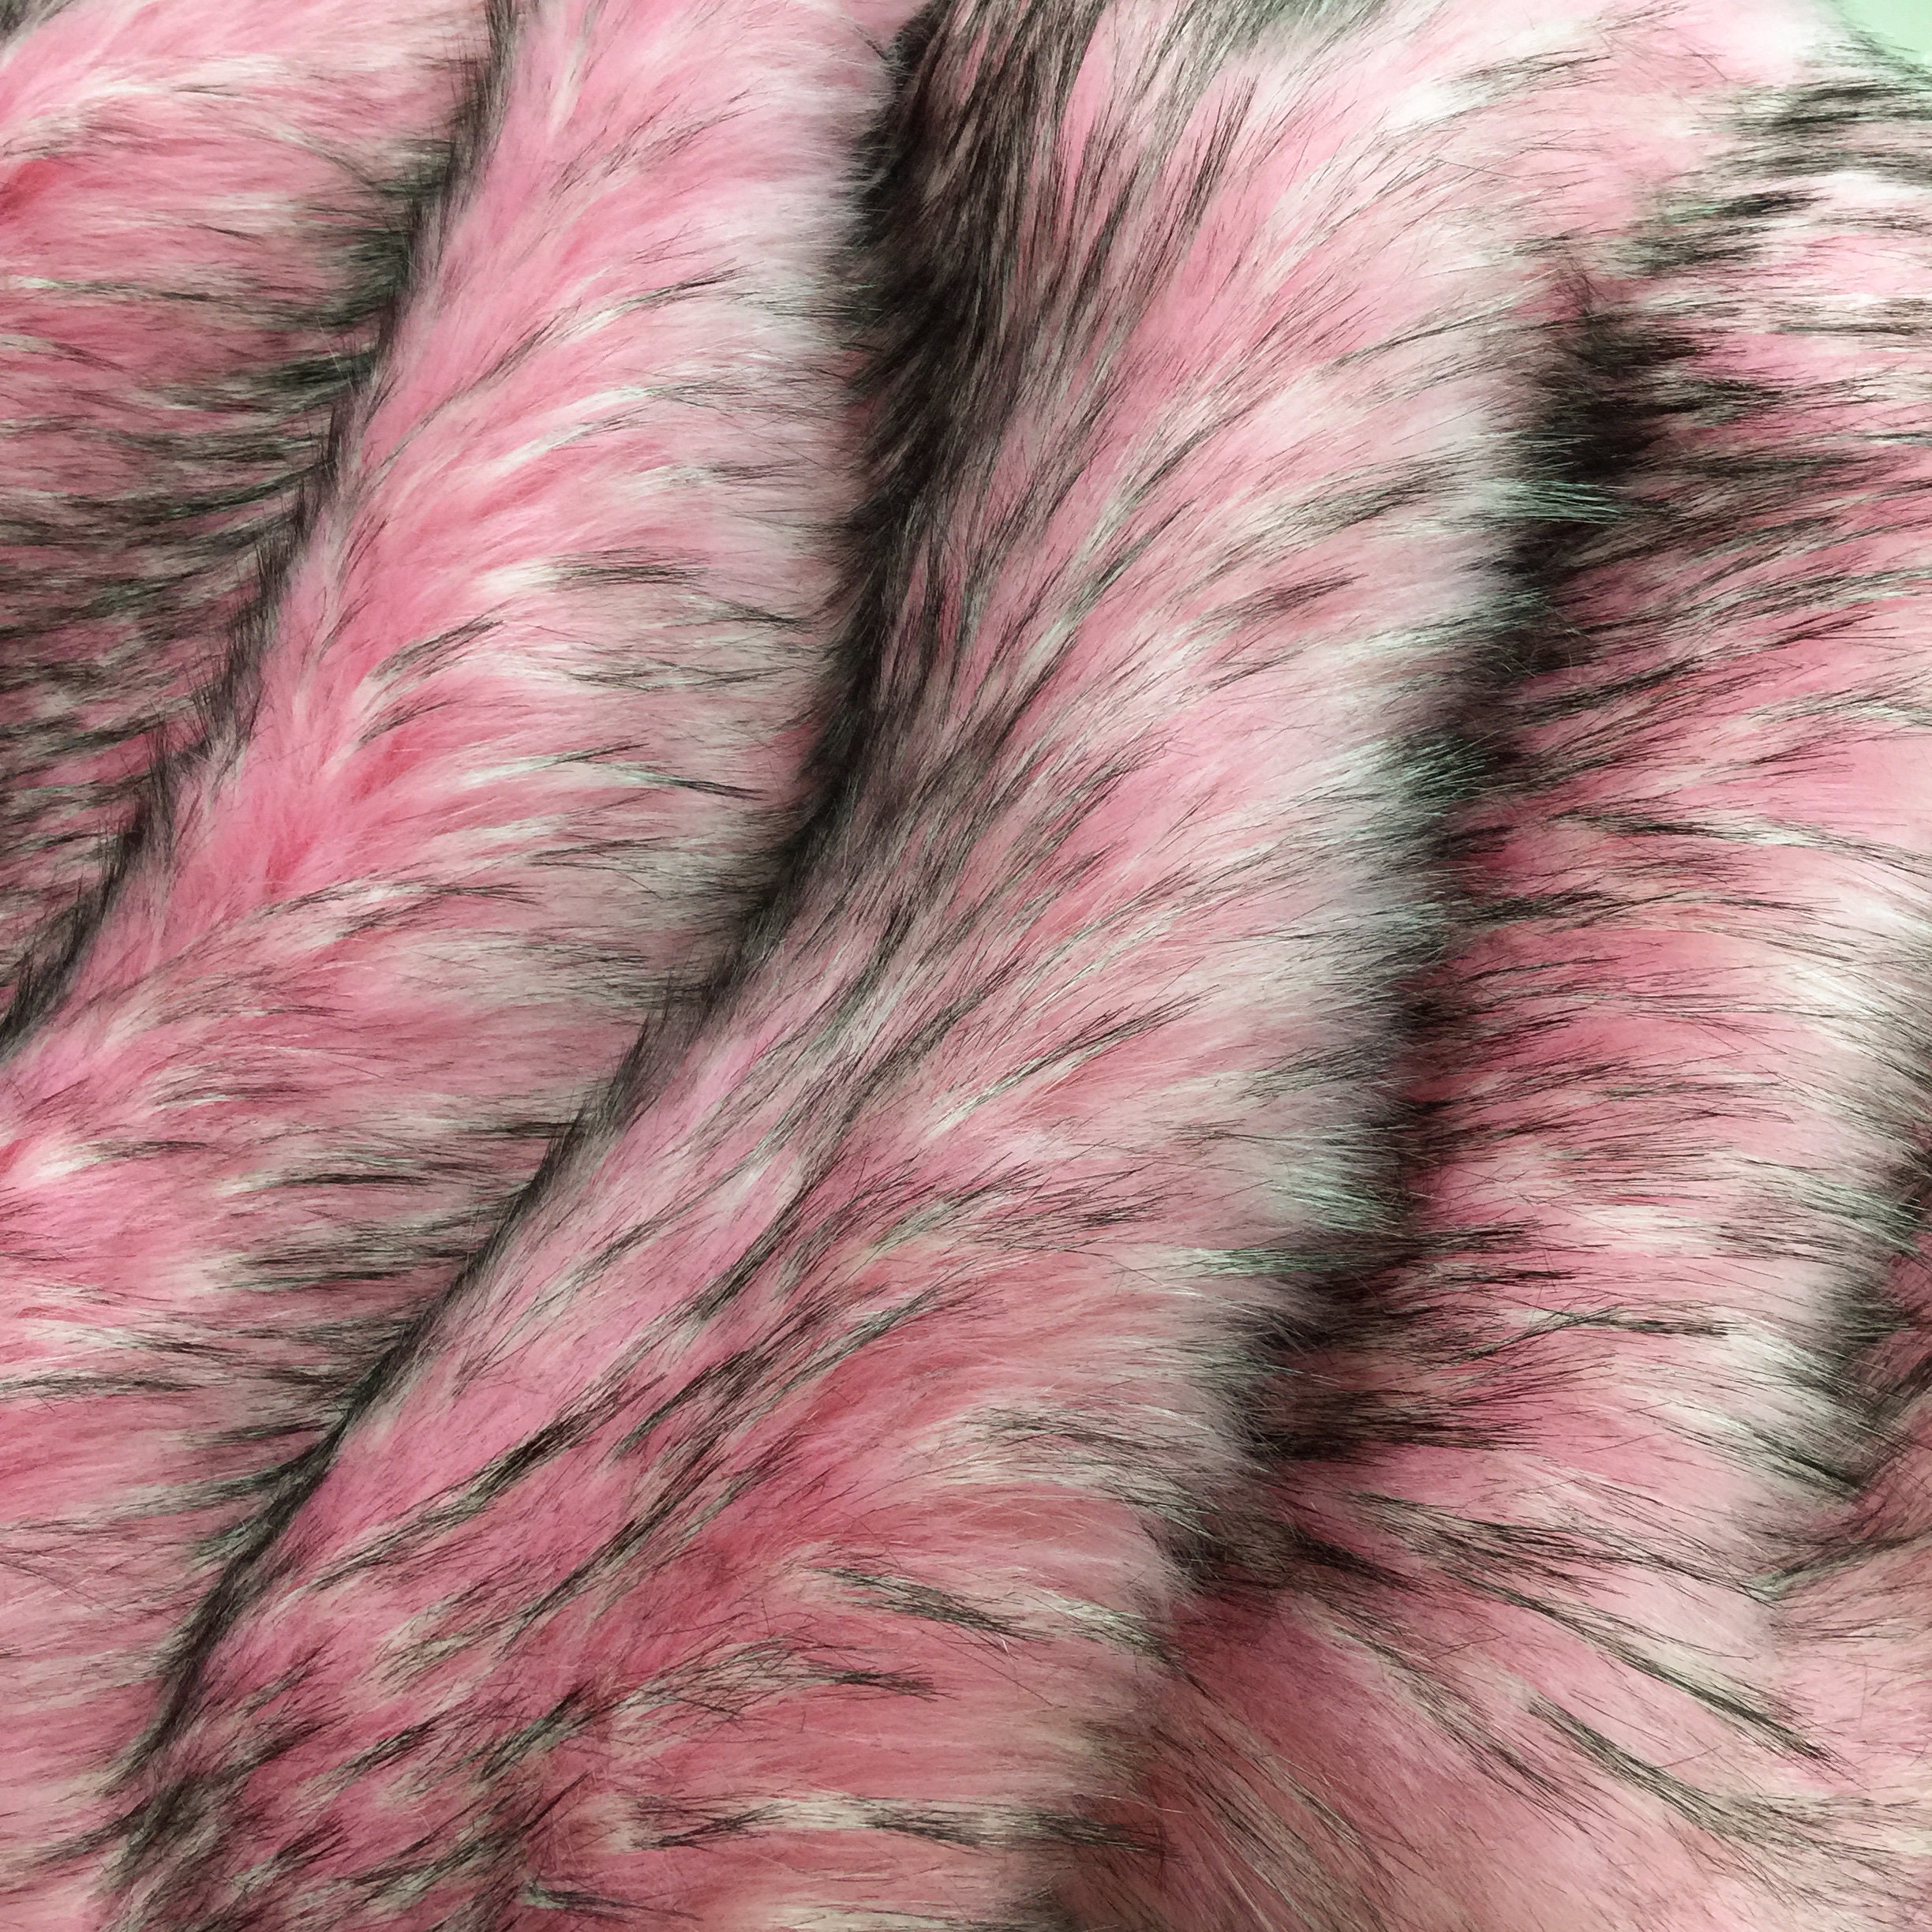 Fab Faux Fur Pom Poms in Pink - Black Tip at Fabulous Yarn